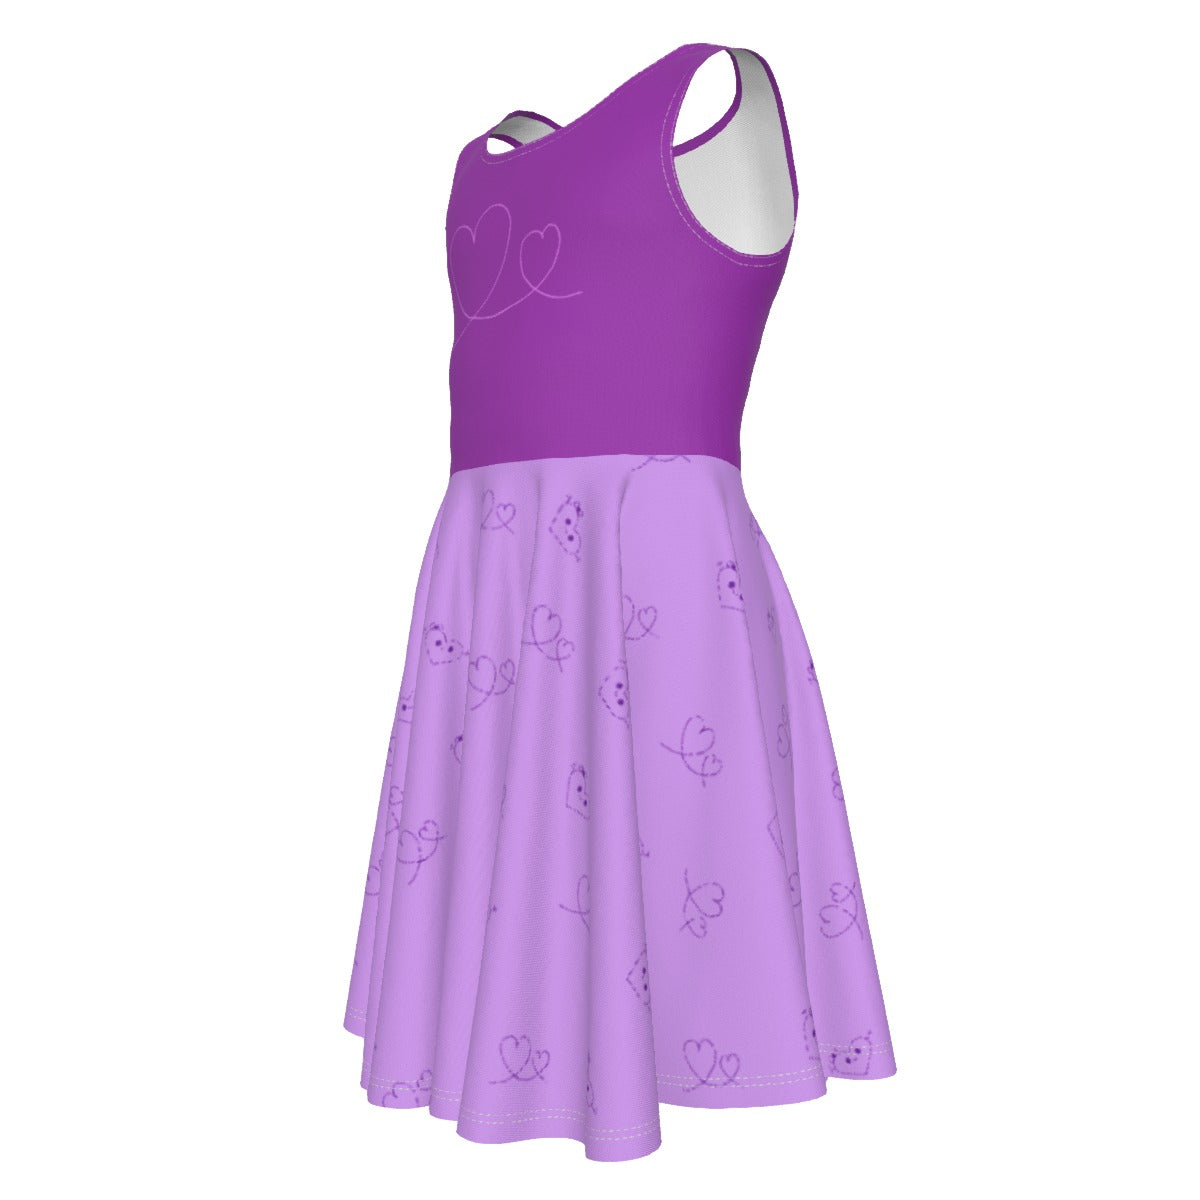 Girls Purple Dress with Hearts